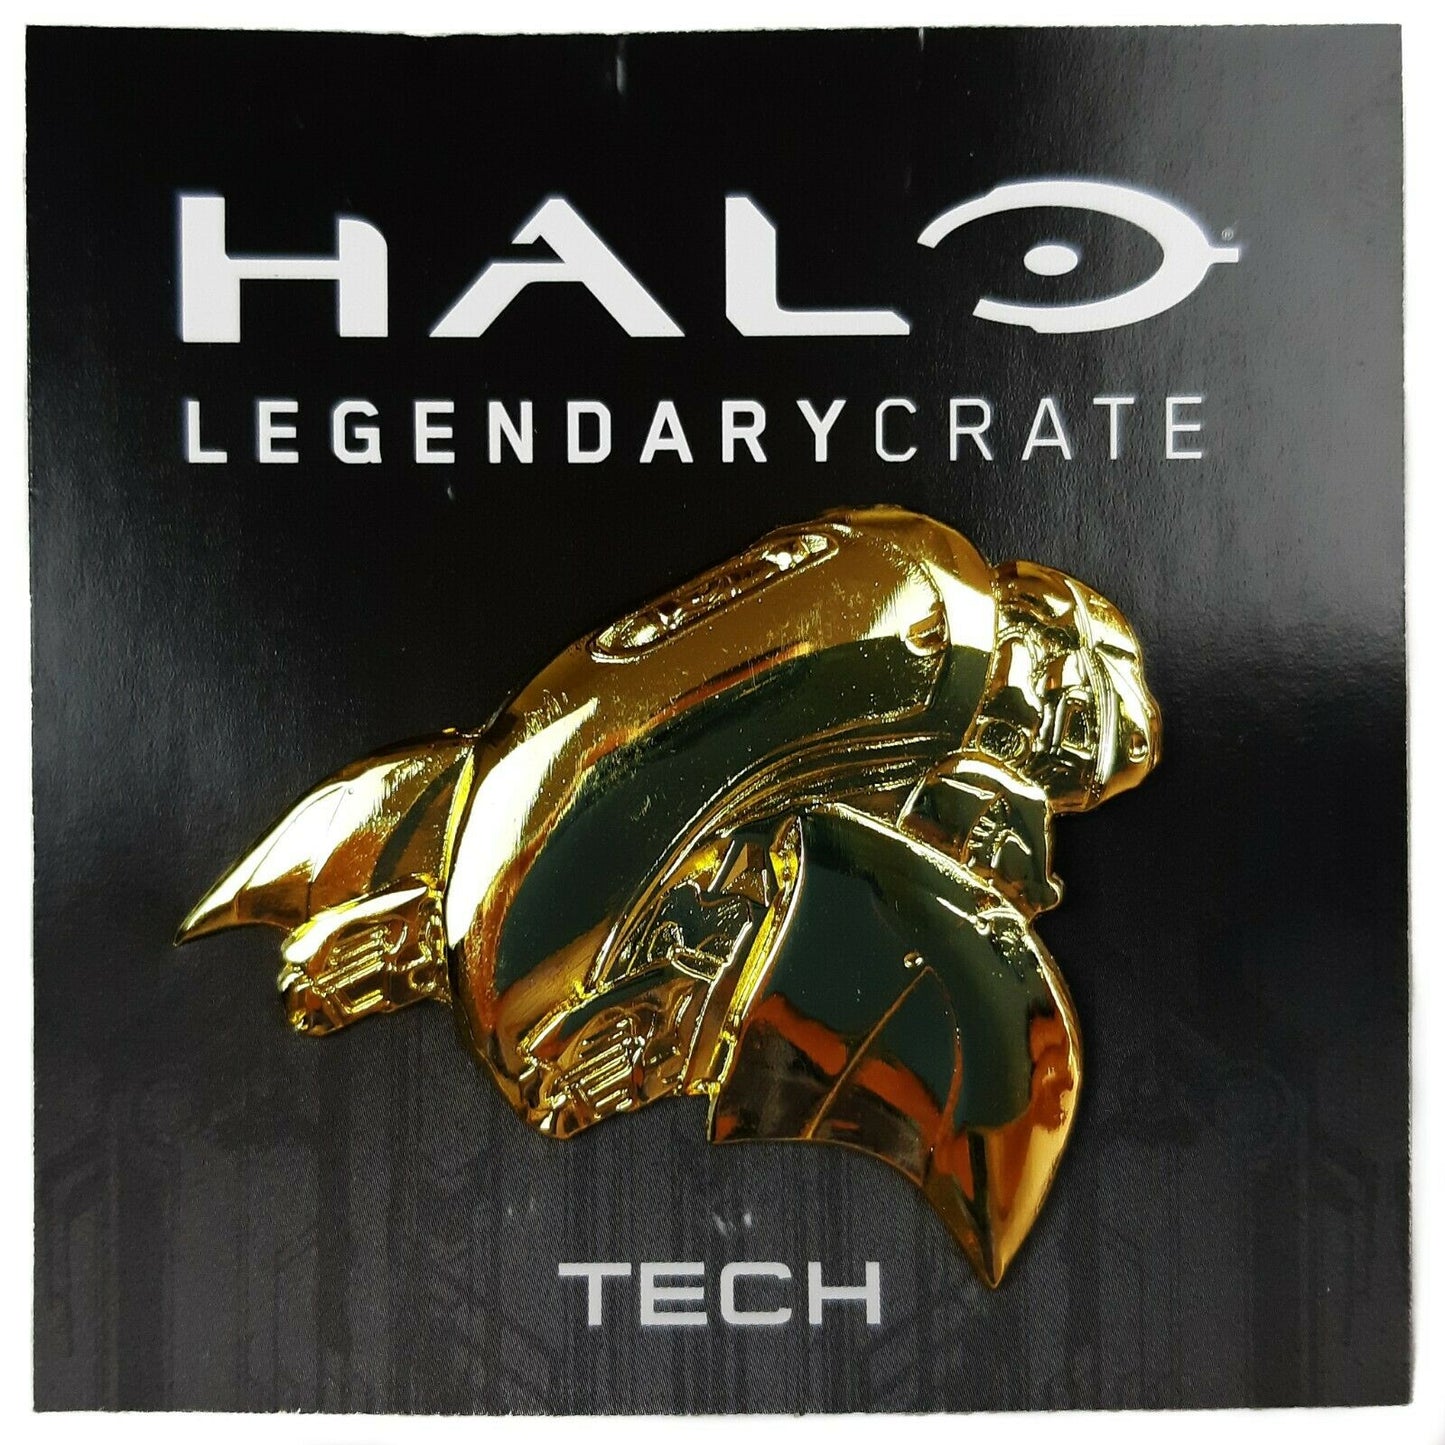 Pin on Halo